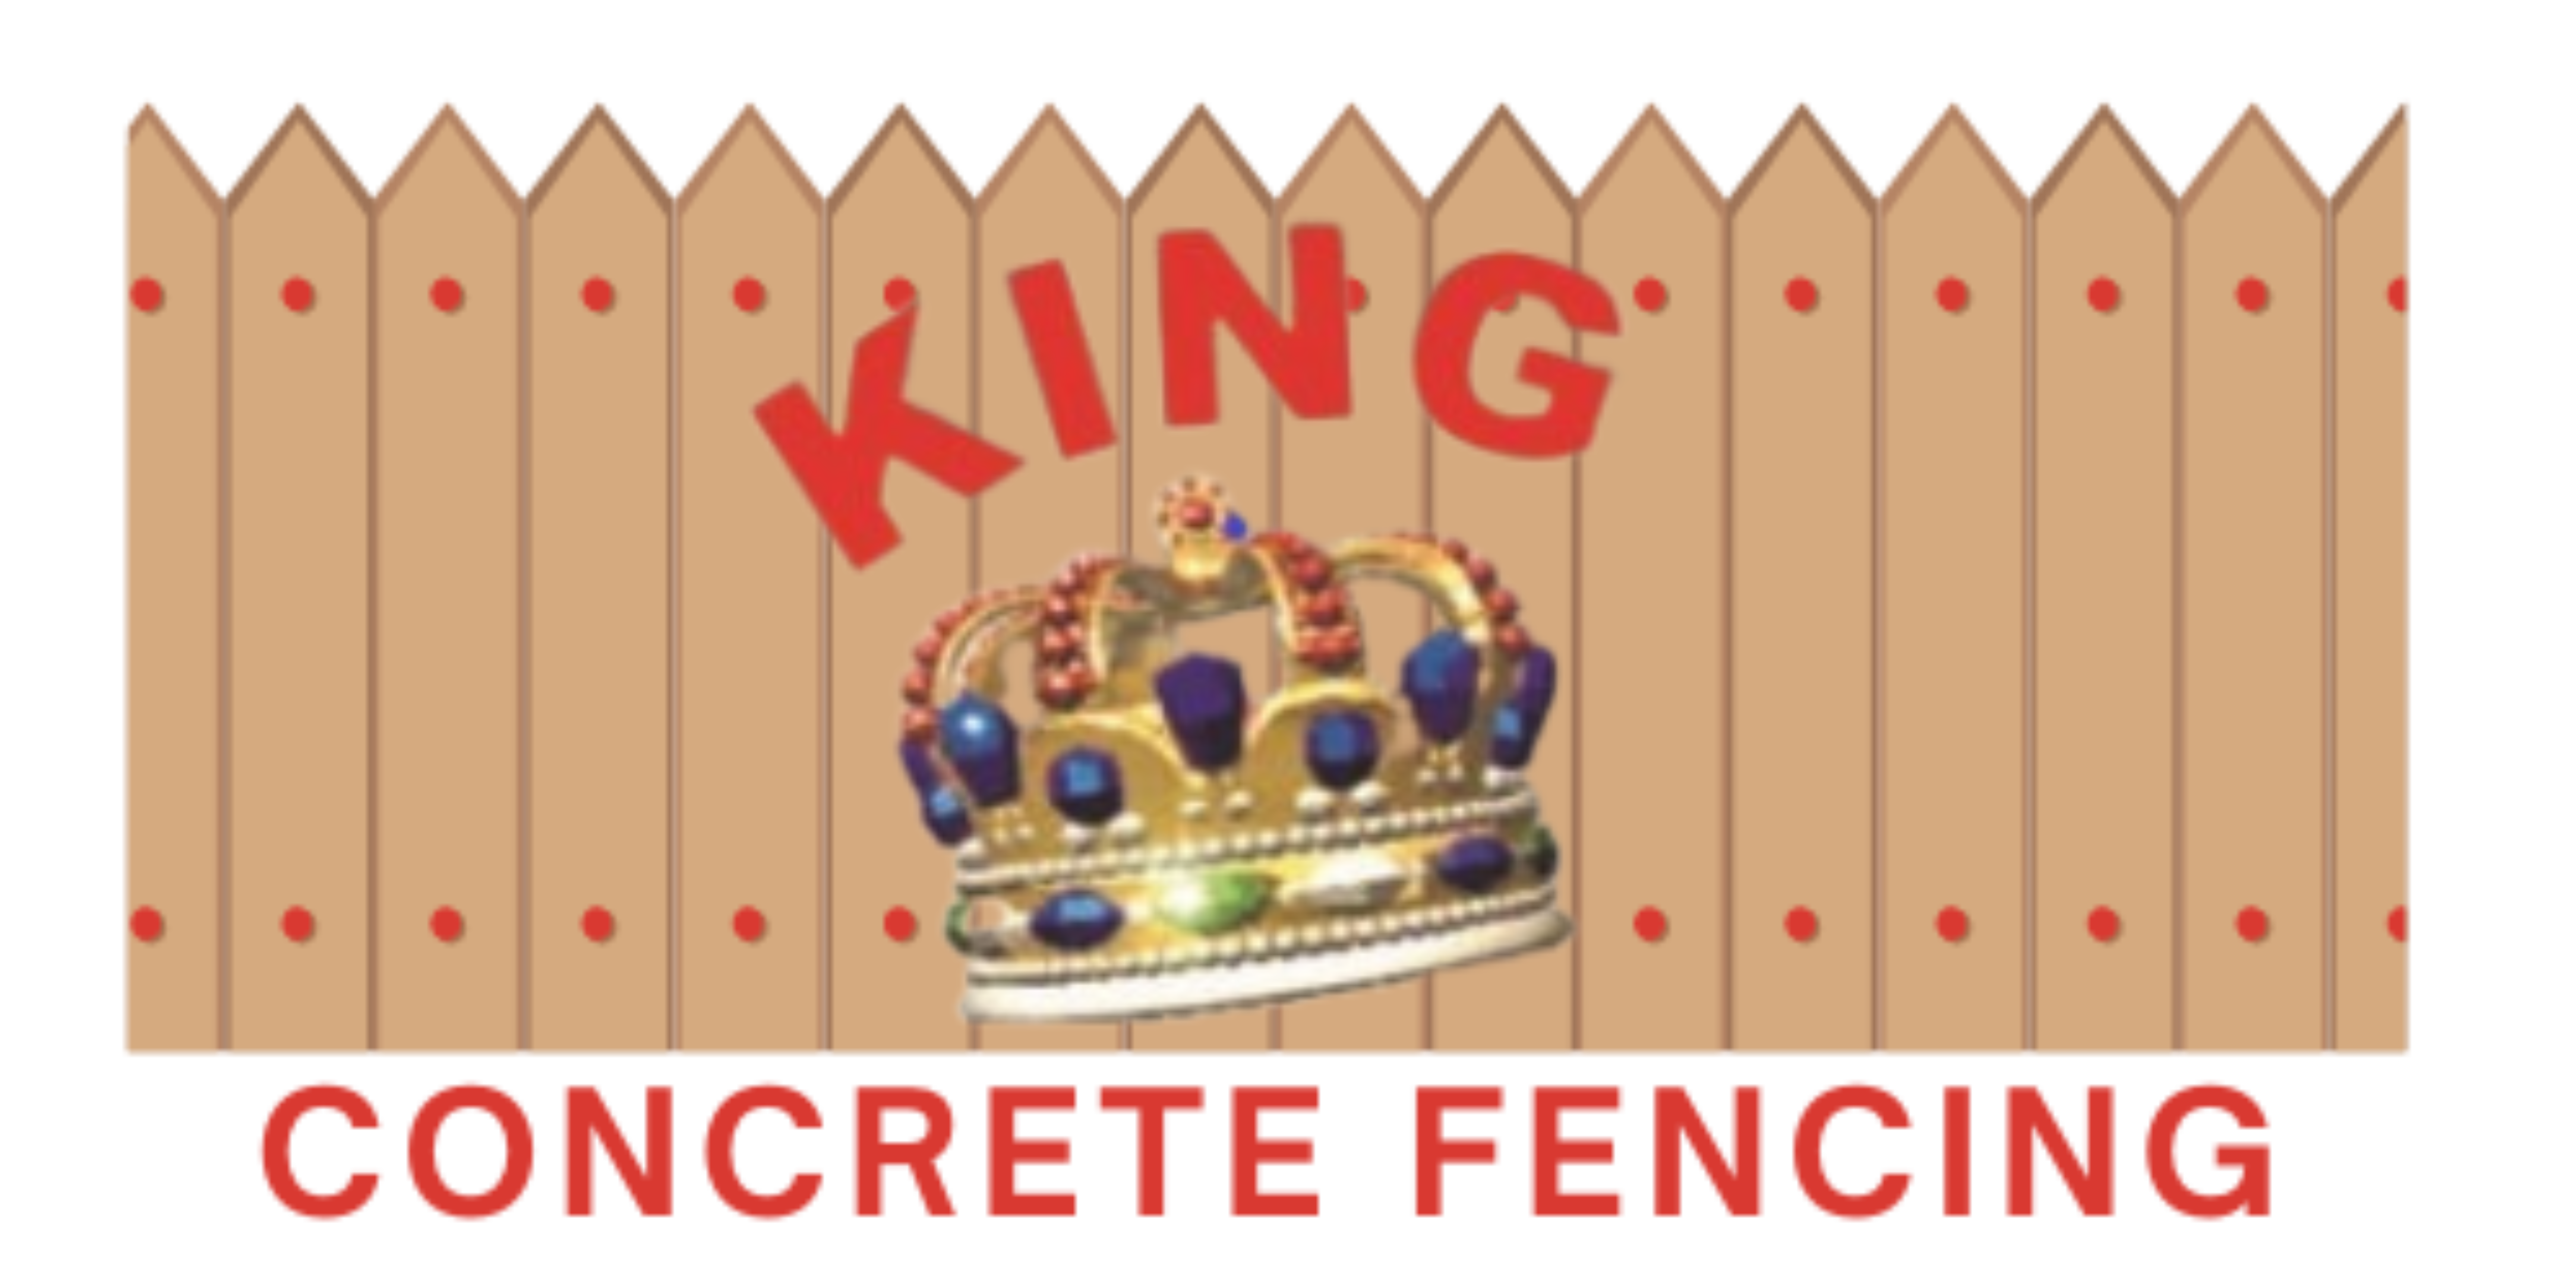 King Concrete Fencing